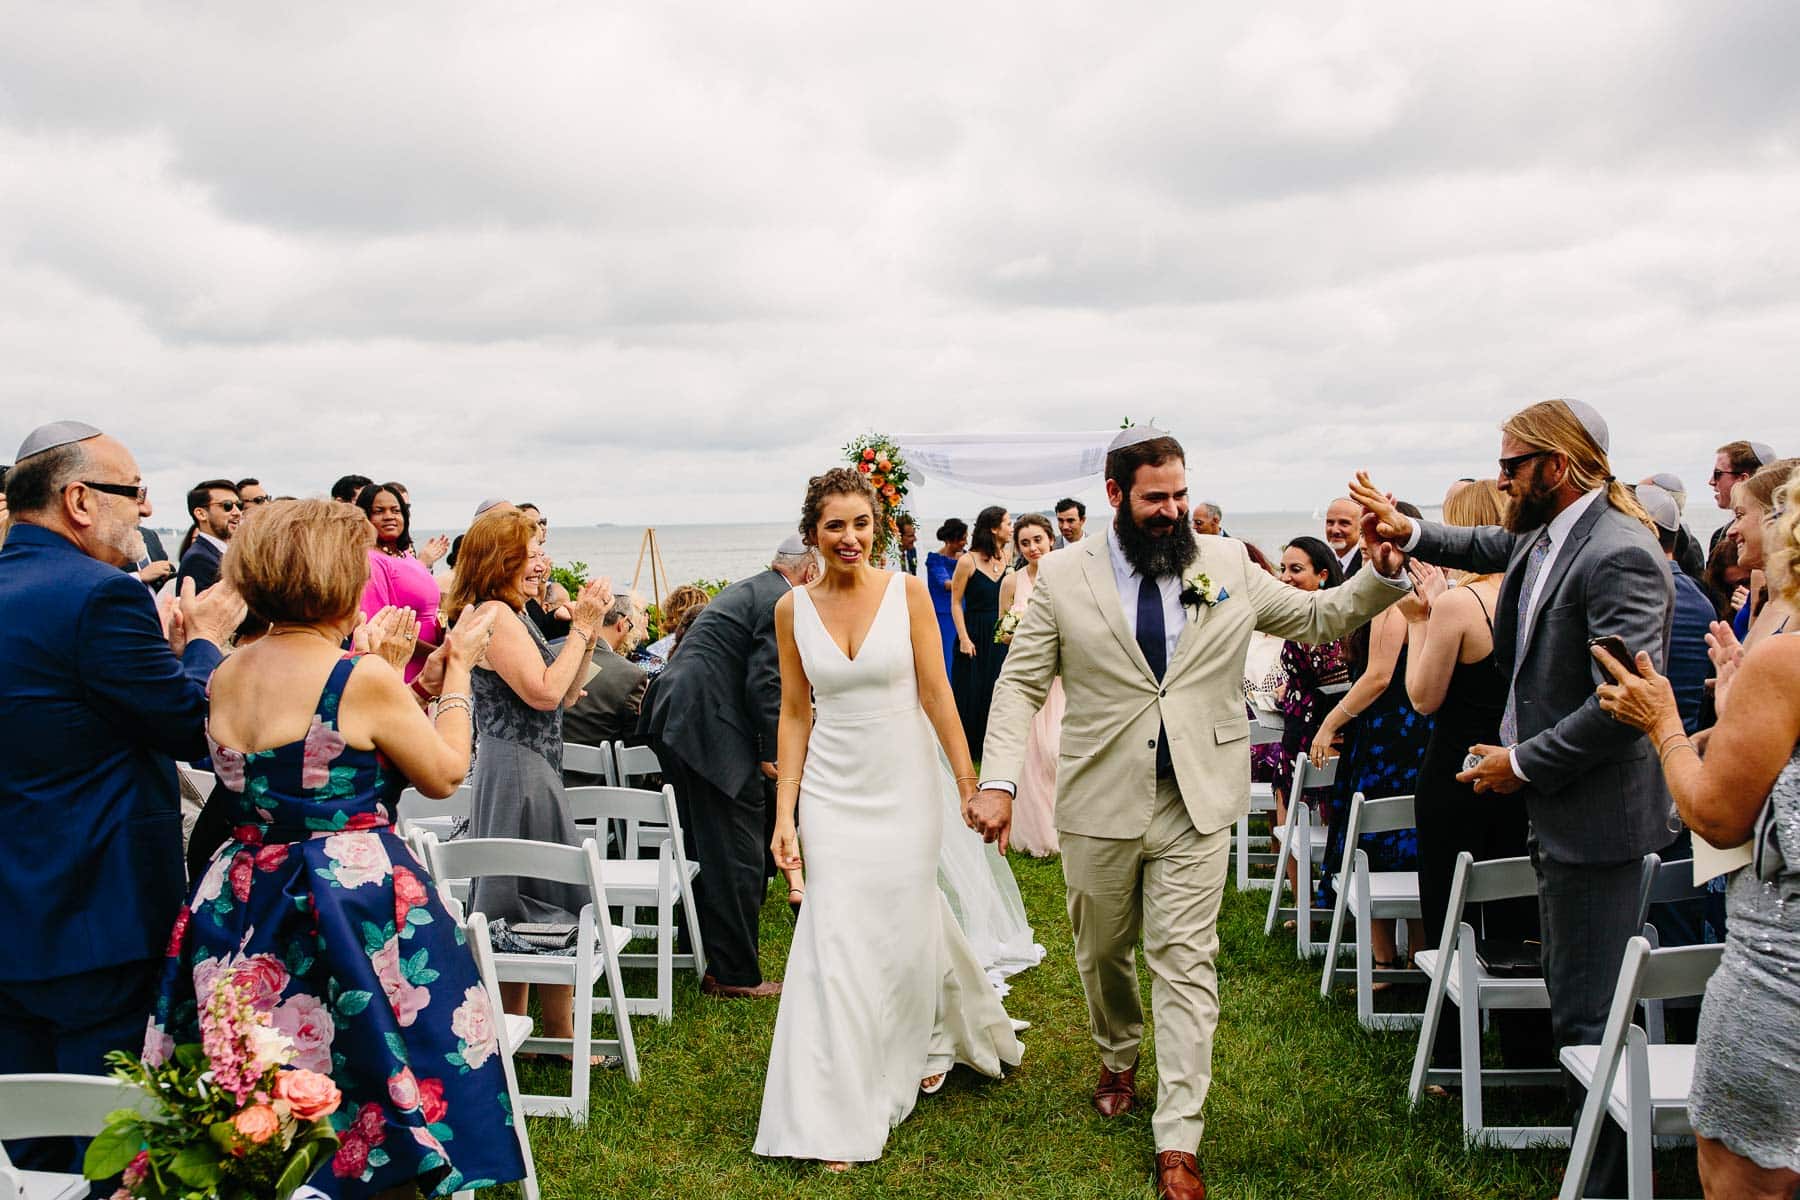 Misselwood wedding ceremony | Kelly Benvenuto Photography | Boston wedding photographer